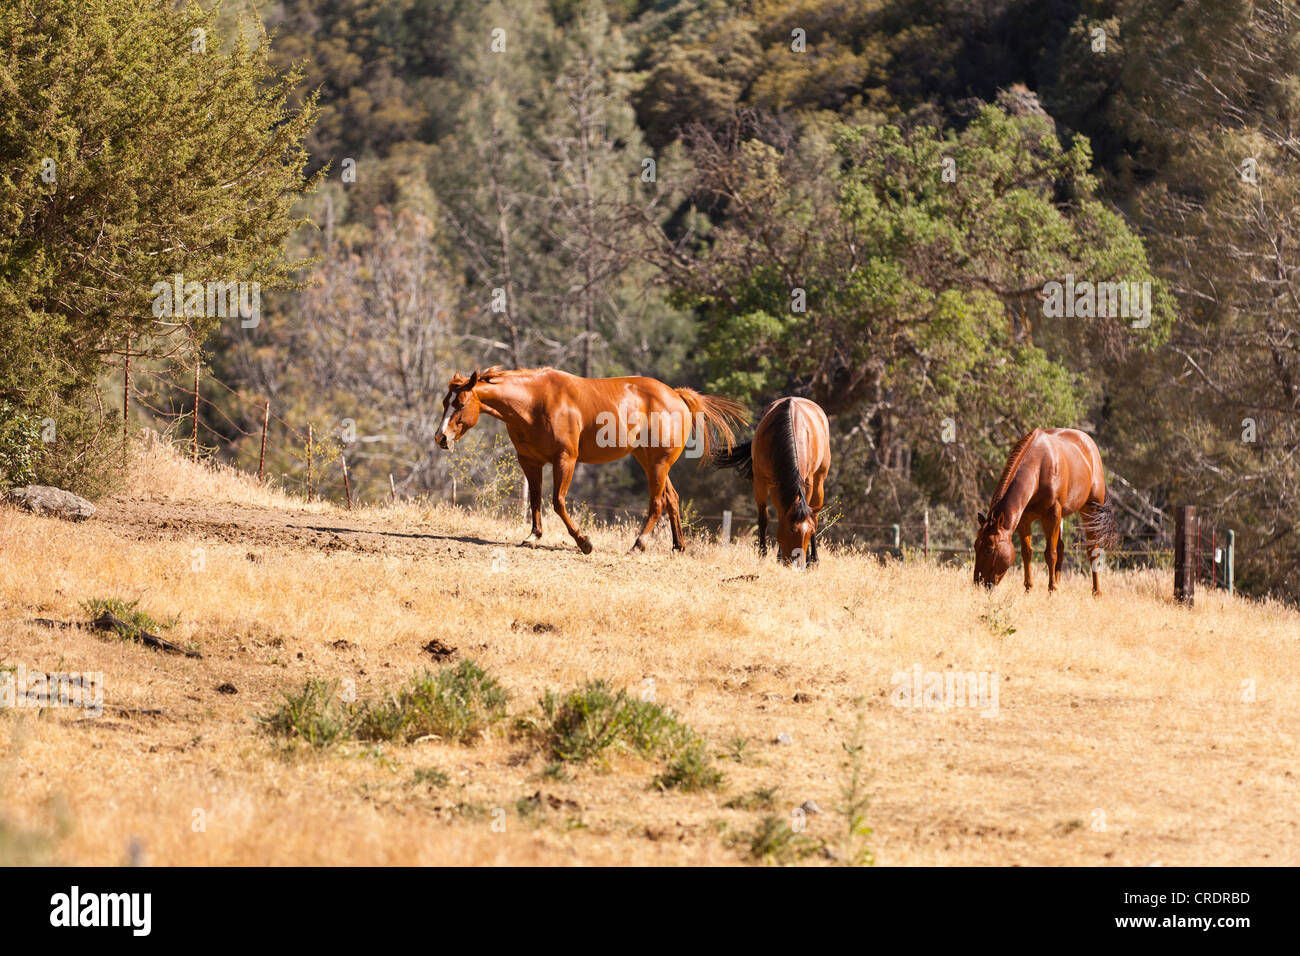 Horses grazing on dry grass field Stock Photo